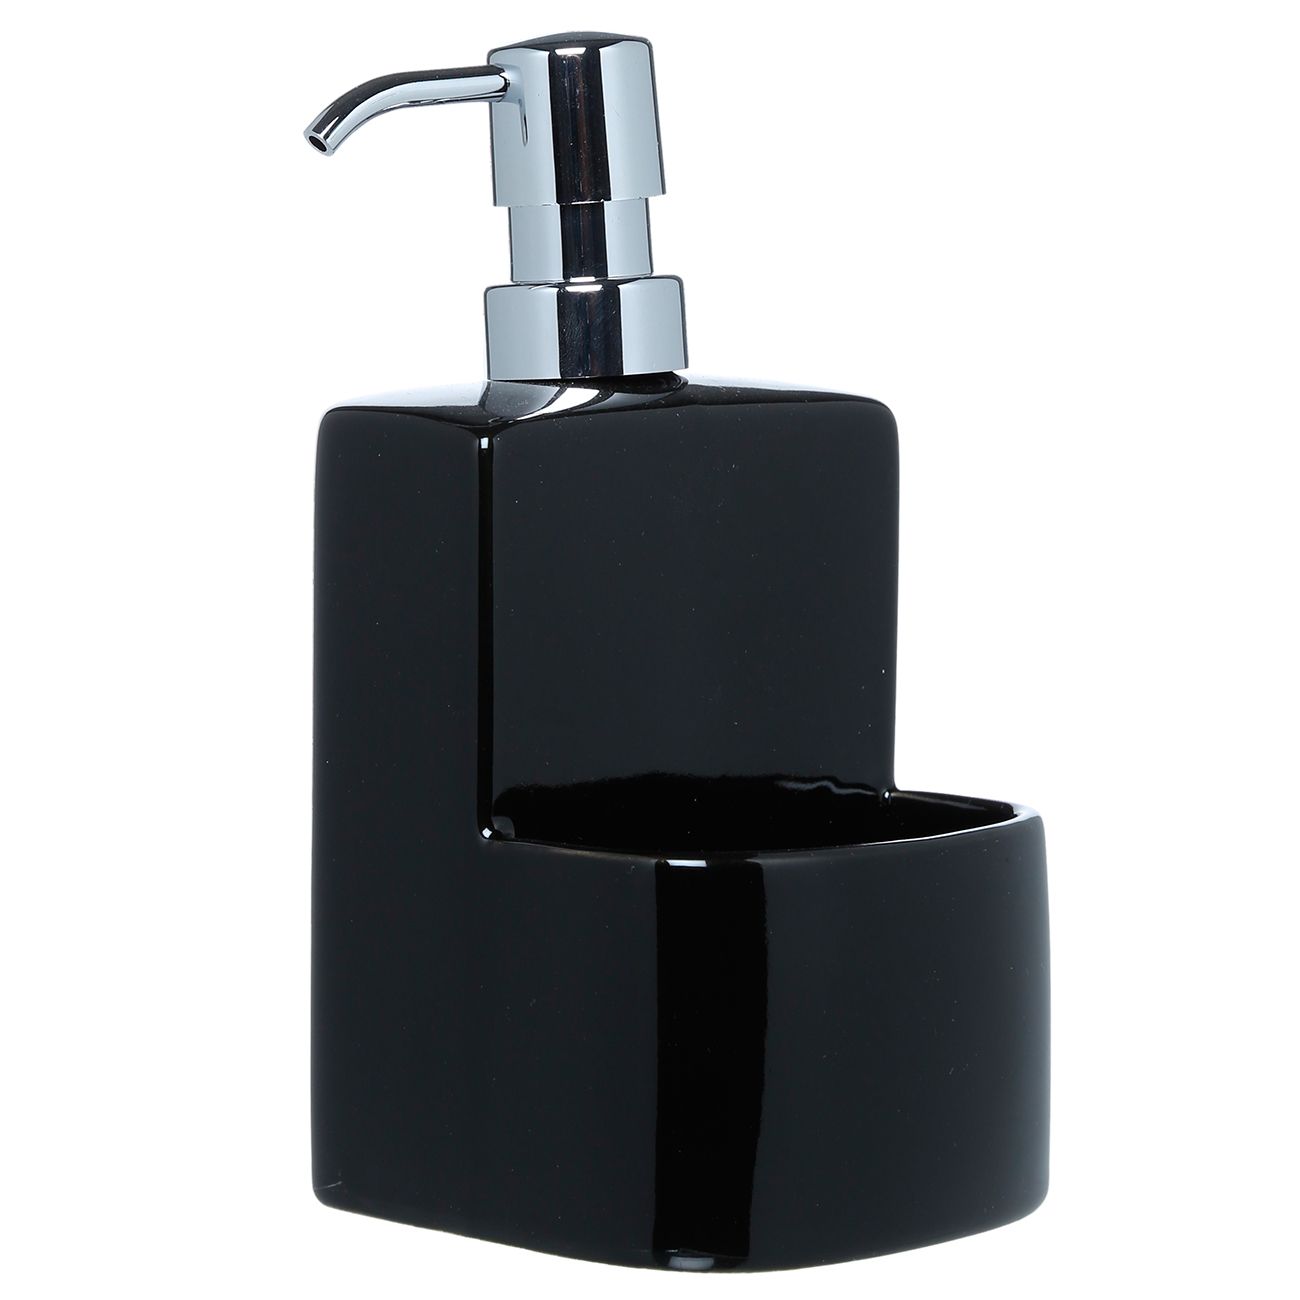 Detergent dispenser, 450 ml, Organizer, with Sponge, Ceramic, Black, Keeping изображение № 2